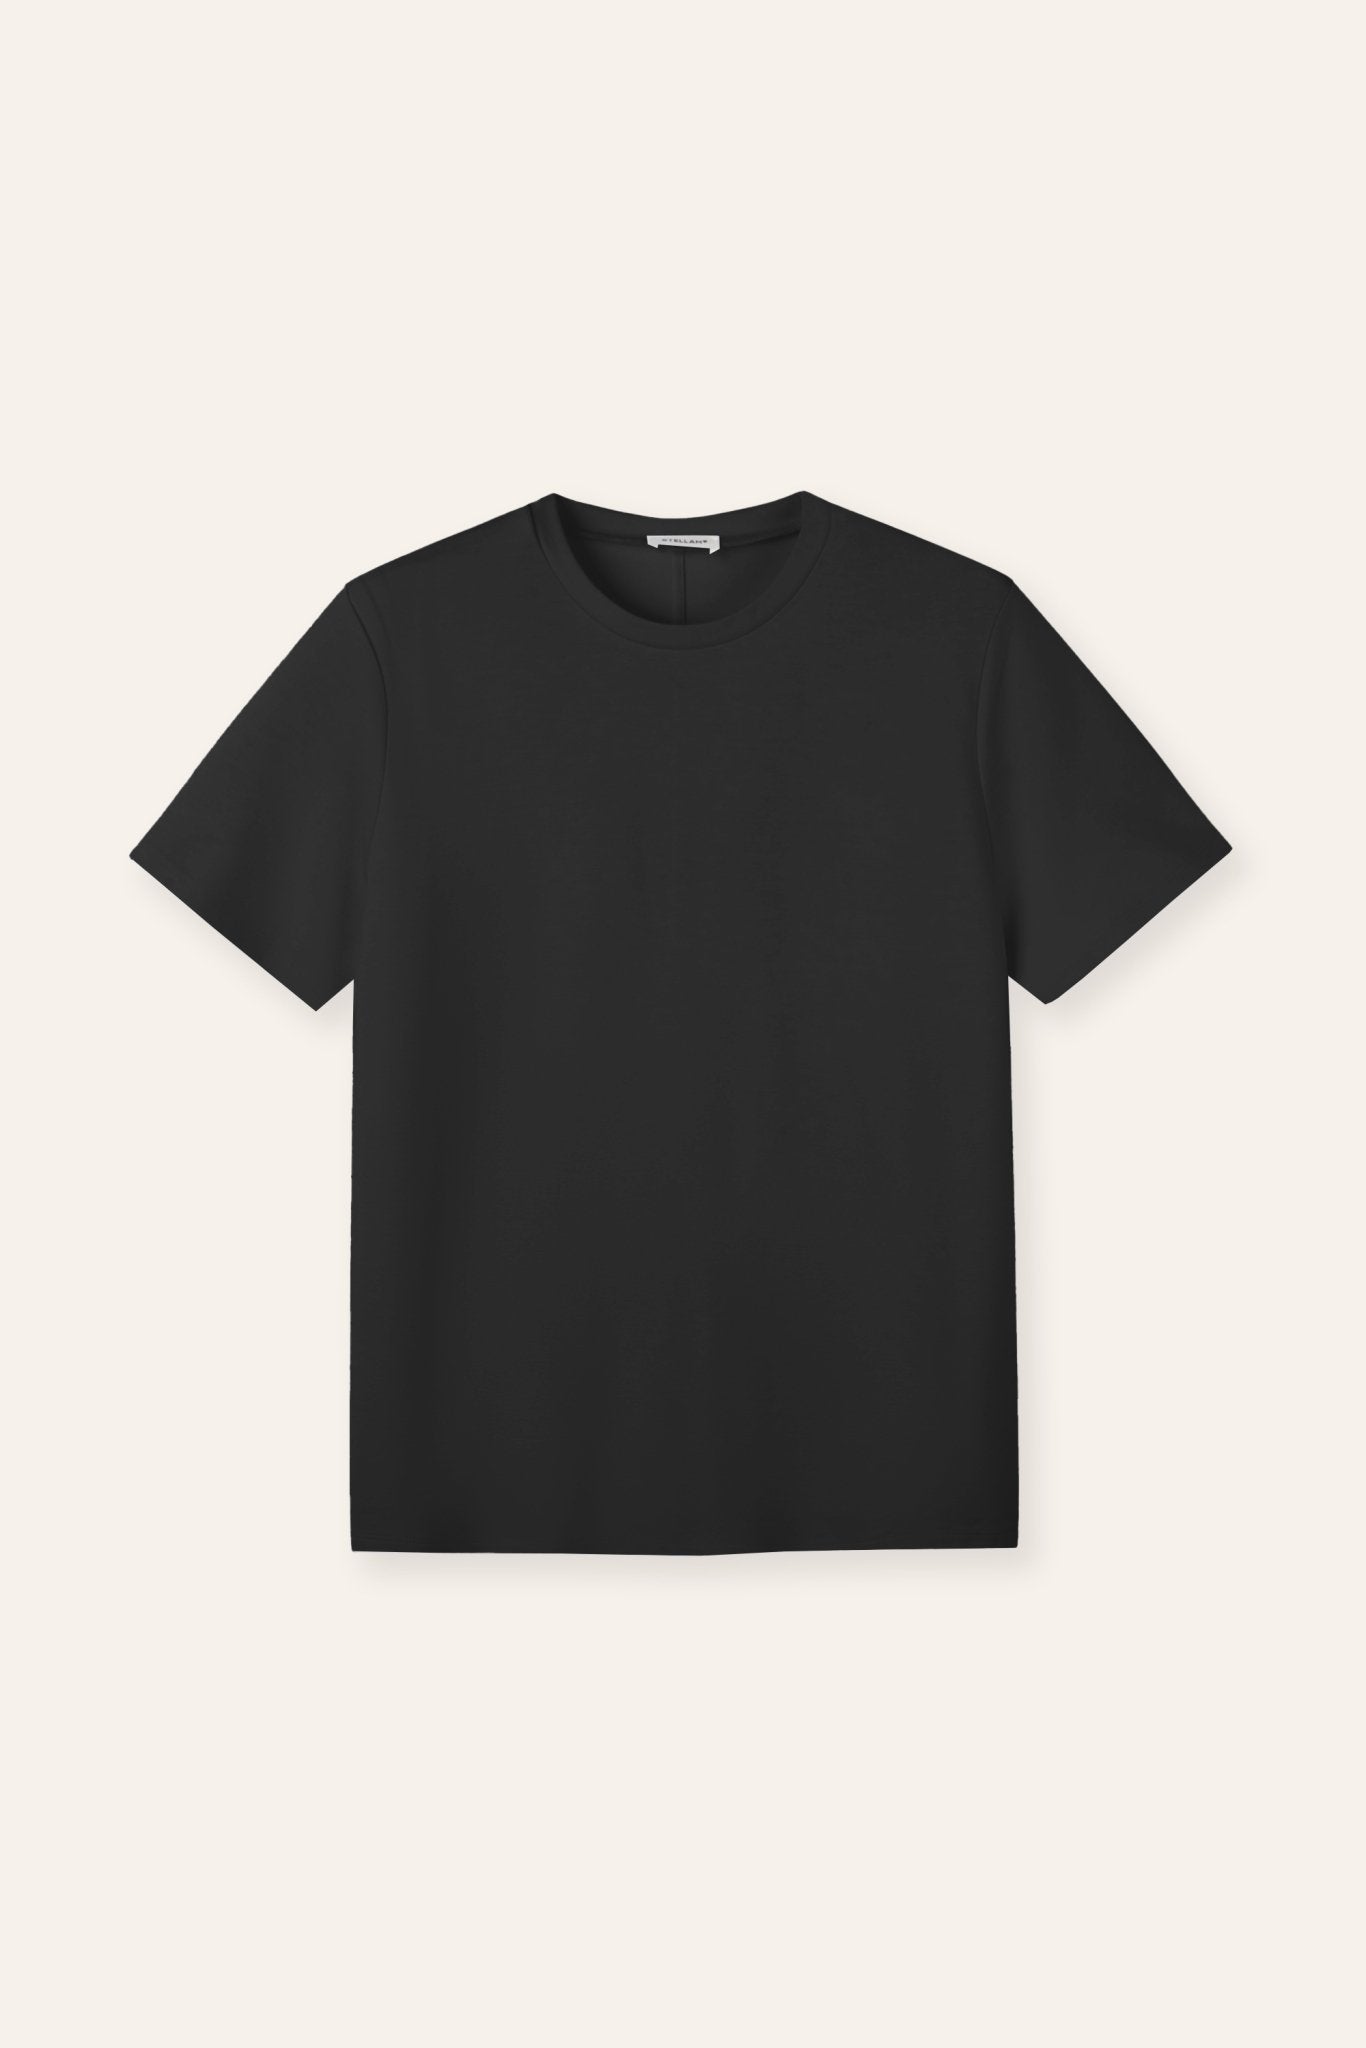 WESLER jersey top (Black) - STELLAM